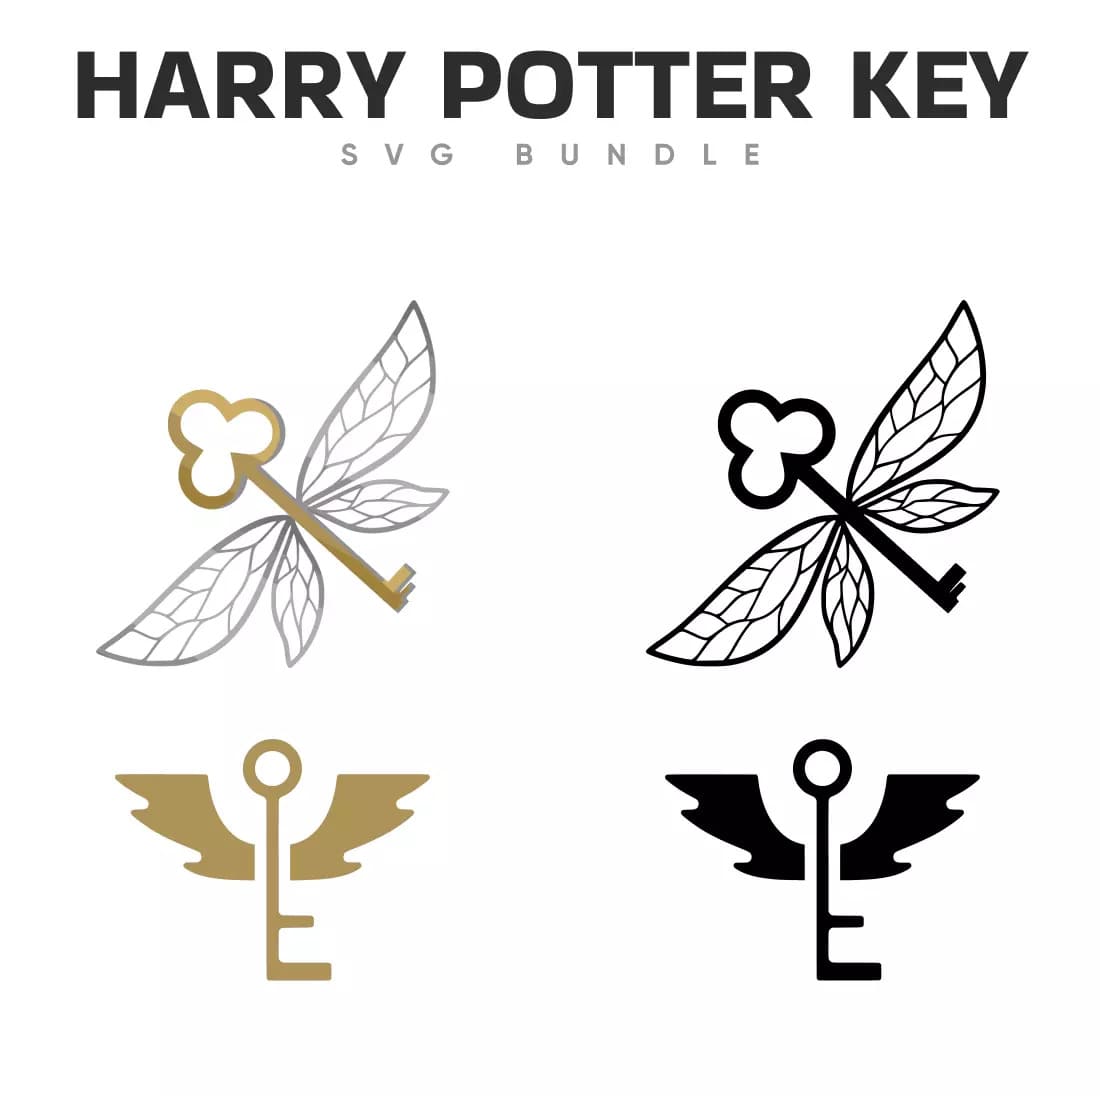 Harry Potter Key SVG Bundle Preview.